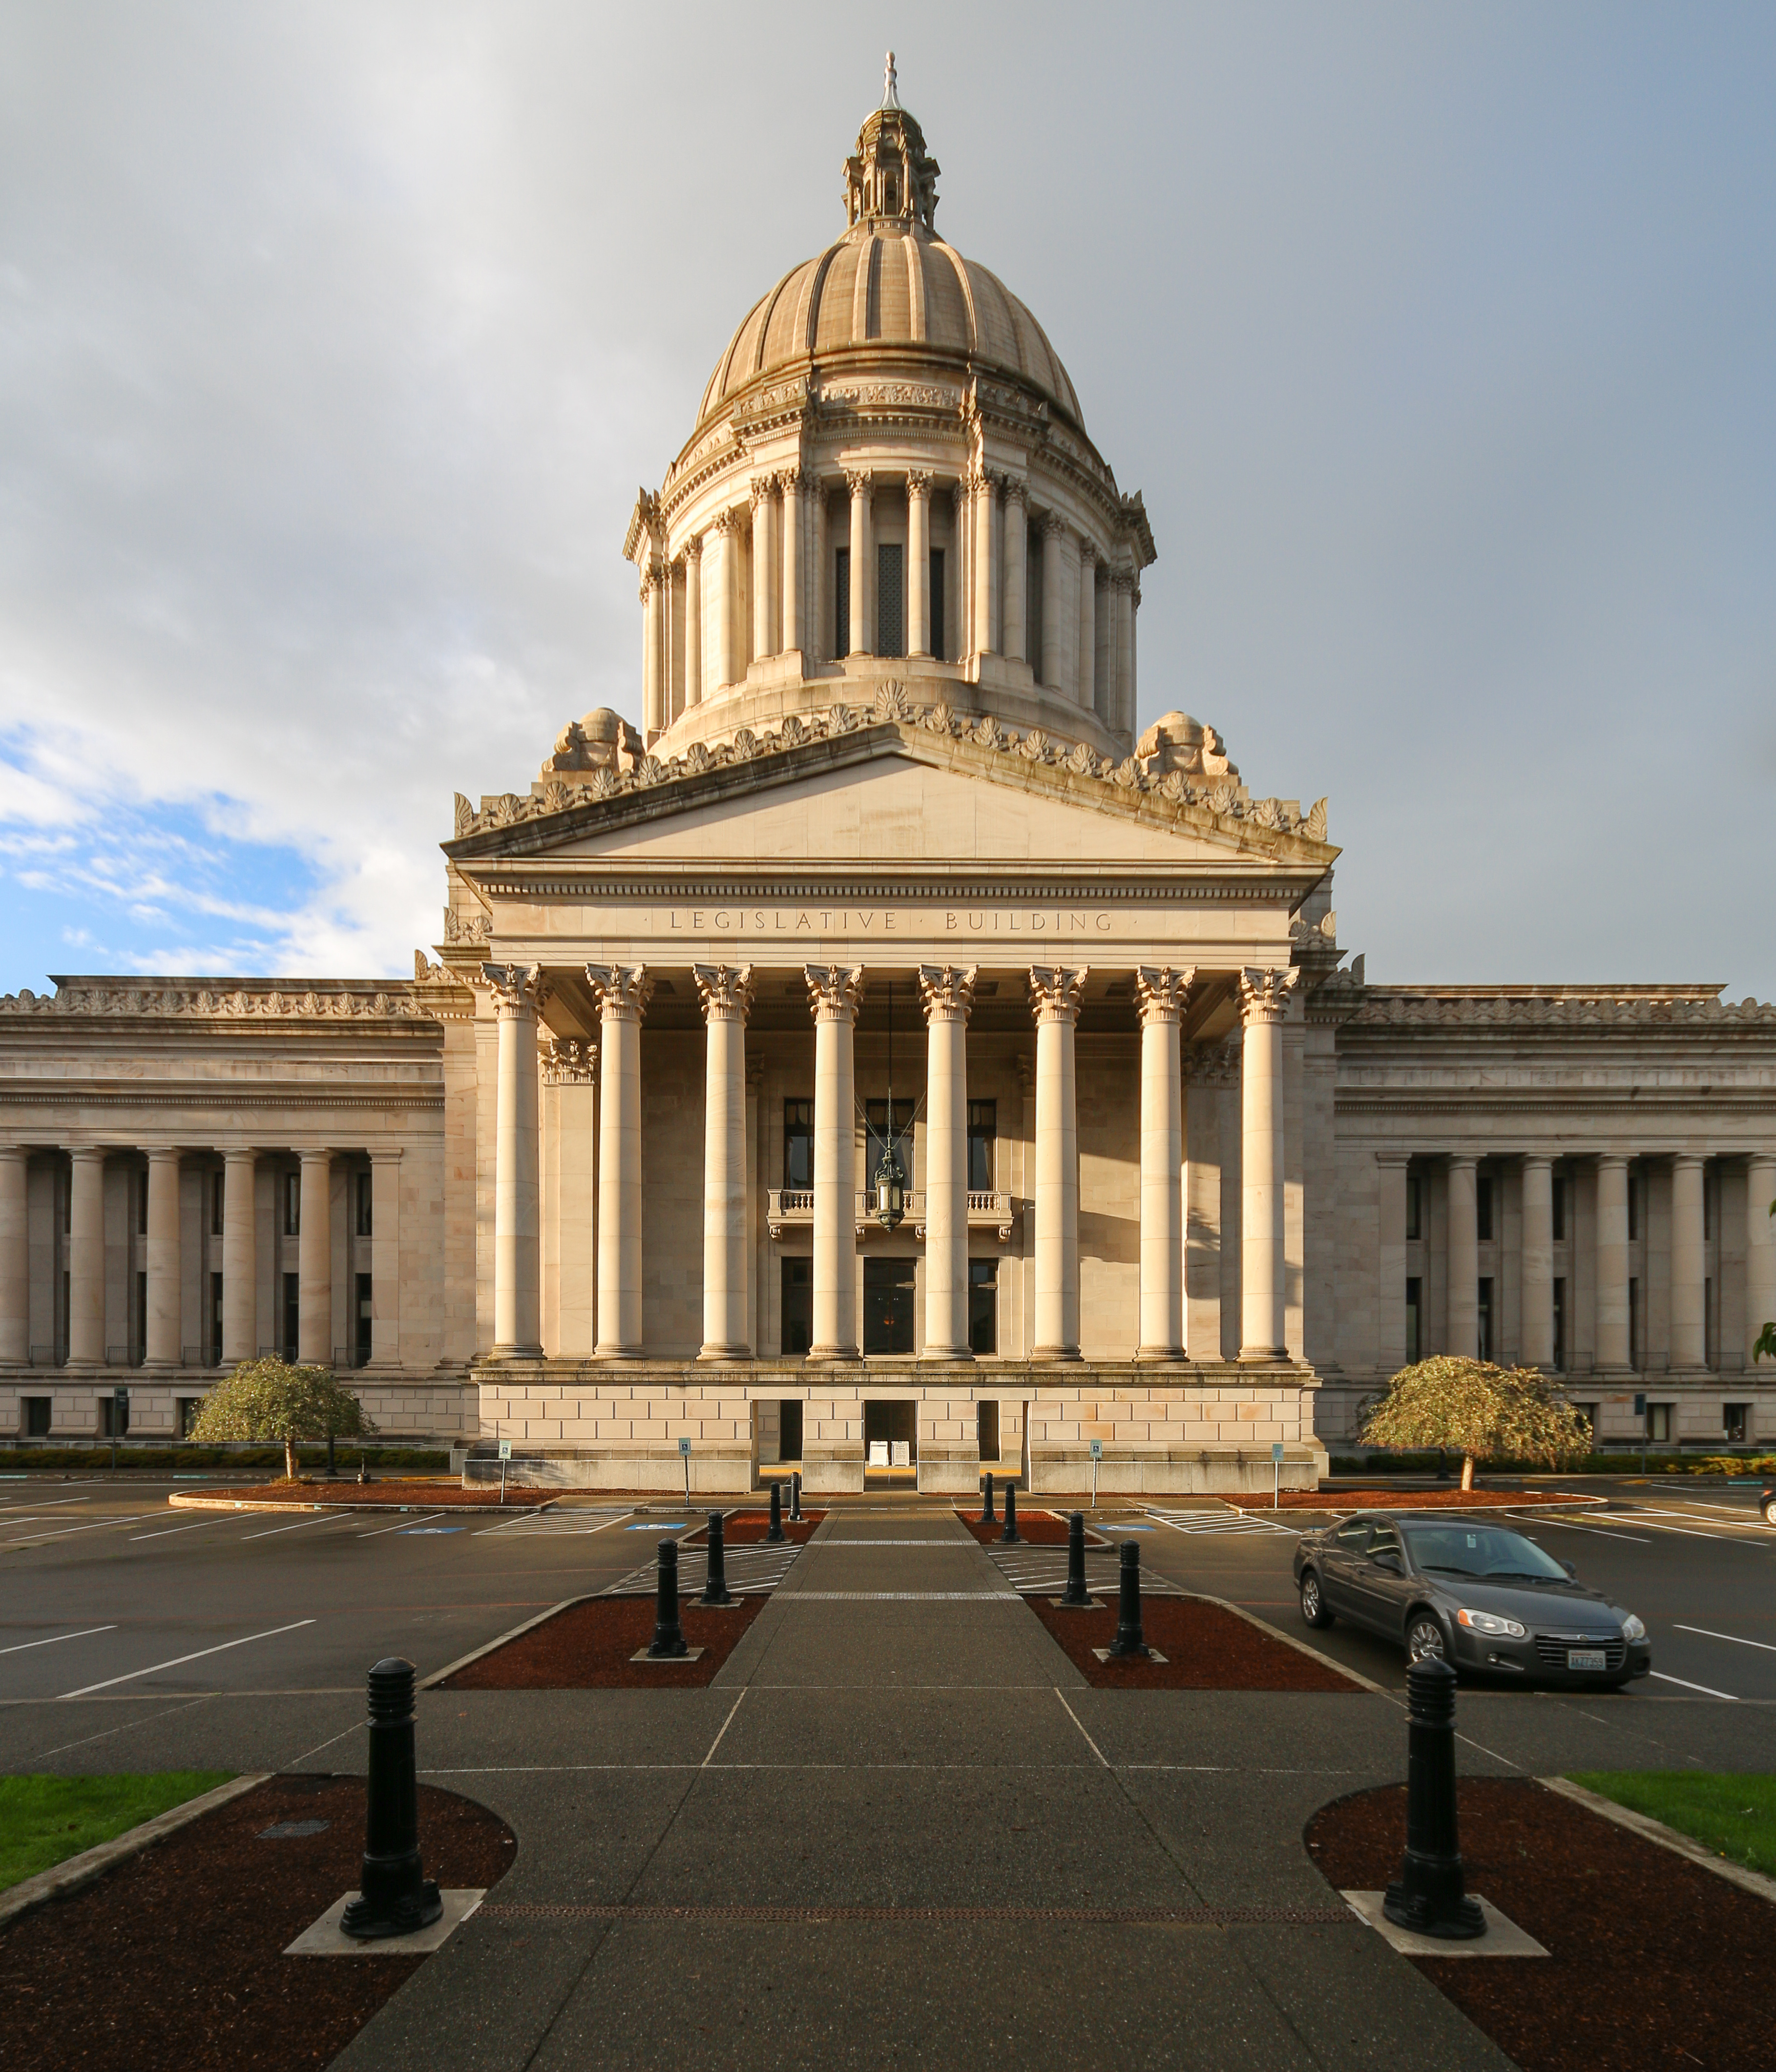 MK03151 Washington State Capitol (Olympia) - Legislative Building of the Washington State Capitol, Olympia